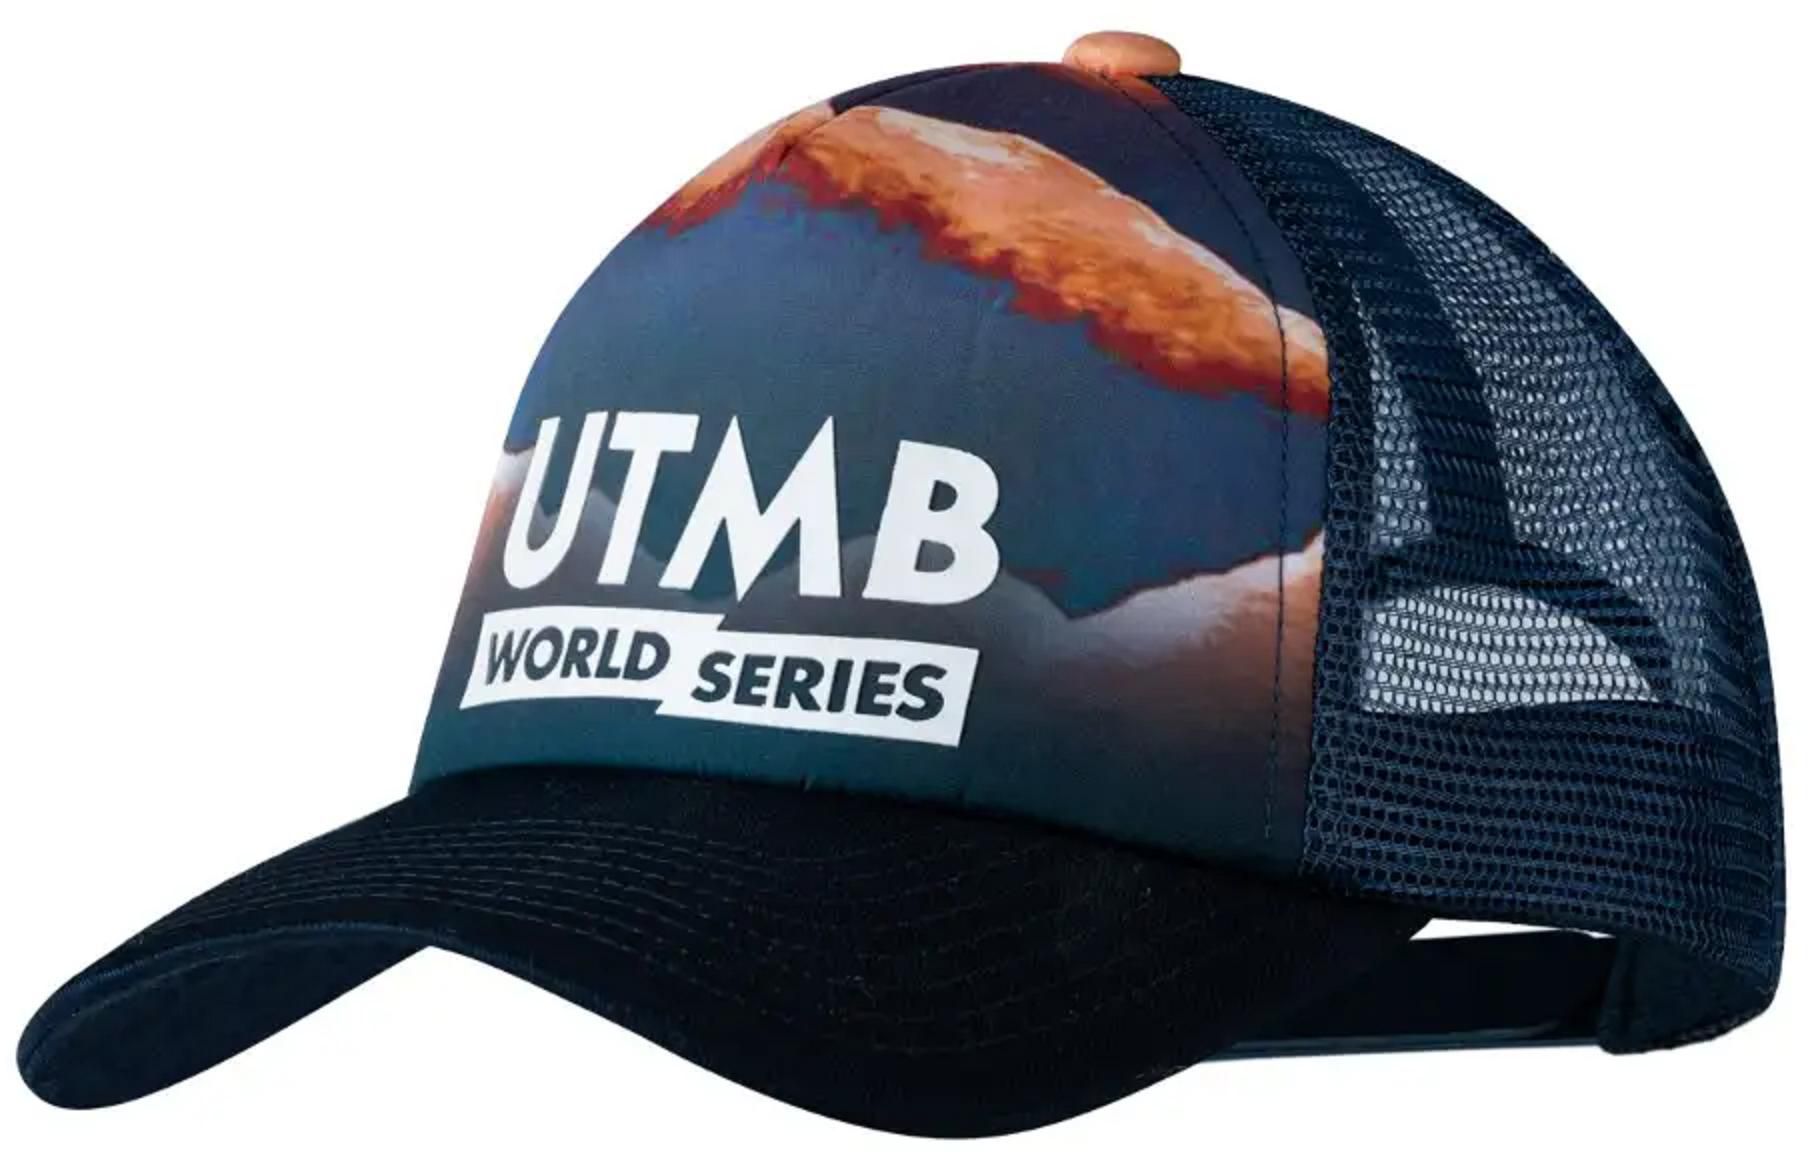 BUFF Trucker Cap UTMB World Series - 4 Options